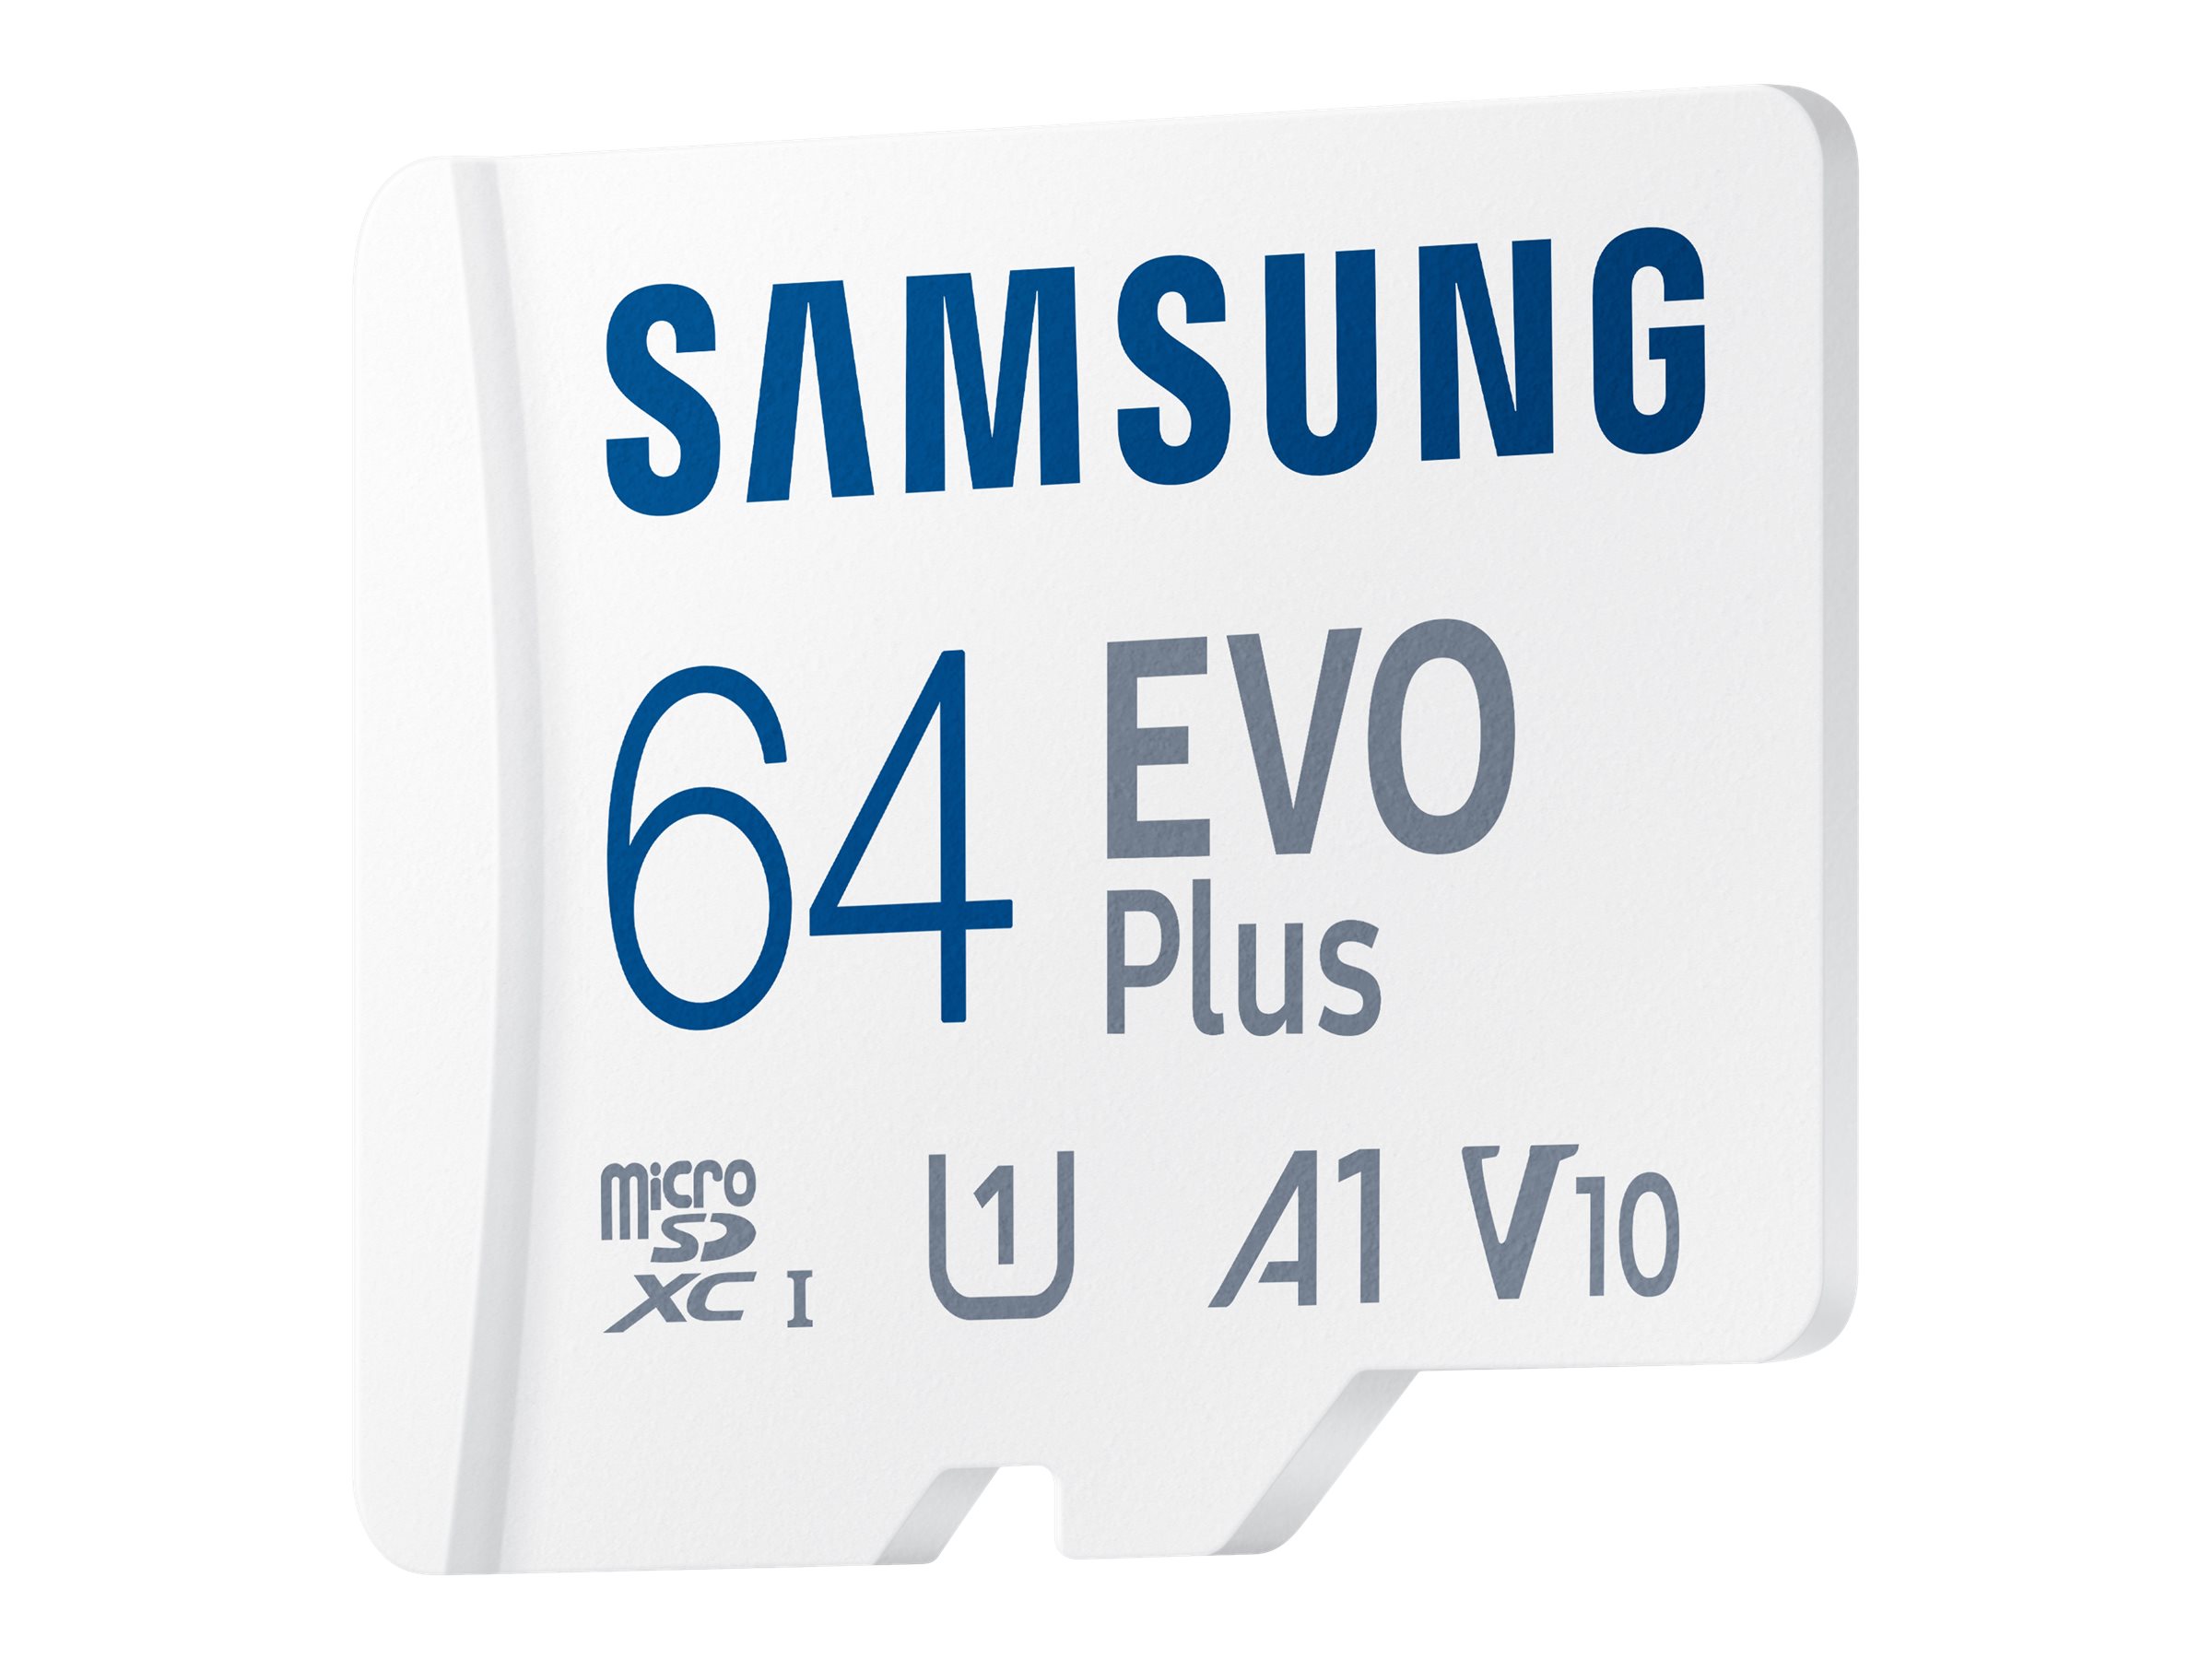 Samsung EVO Plus MB-MC64KA - Carte mémoire flash (adaptateur microSDXC vers SD inclus(e)) - 64 Go - A1 / Video Class V10 / UHS-I U1 / Class10 - microSDXC UHS-I - blanc - MB-MC64KA/EU - Cartes flash